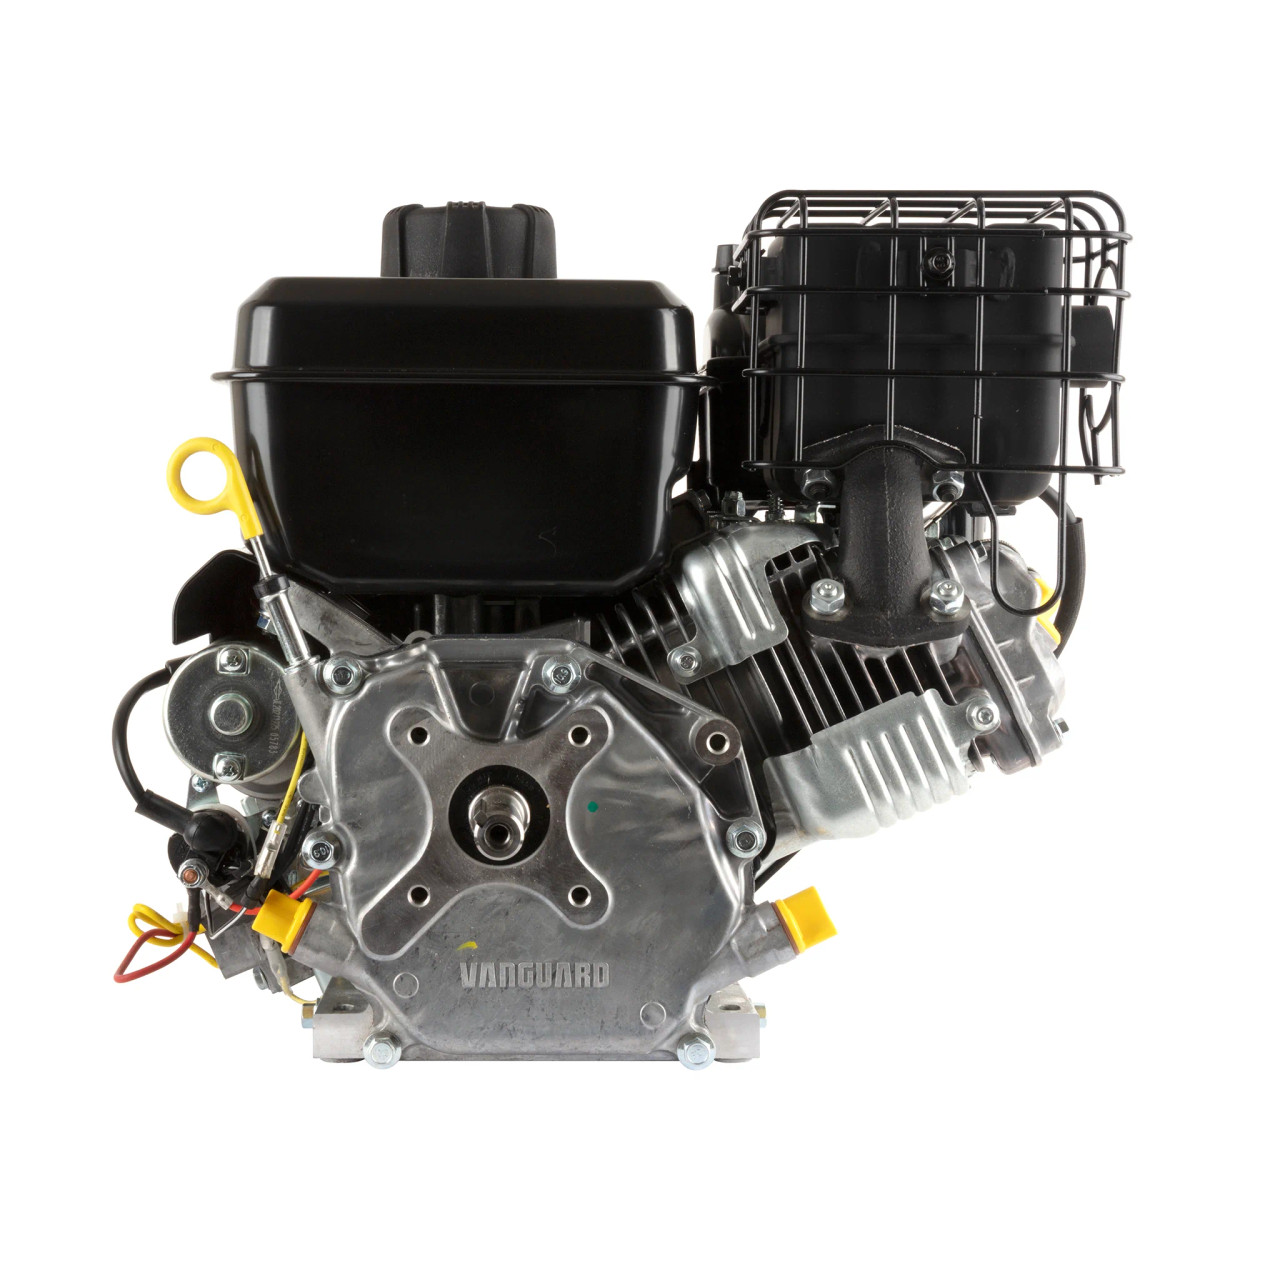 12V337-0139-F1 Vanguard® 6.5 HP 203cc Horizontal Shaft Engines